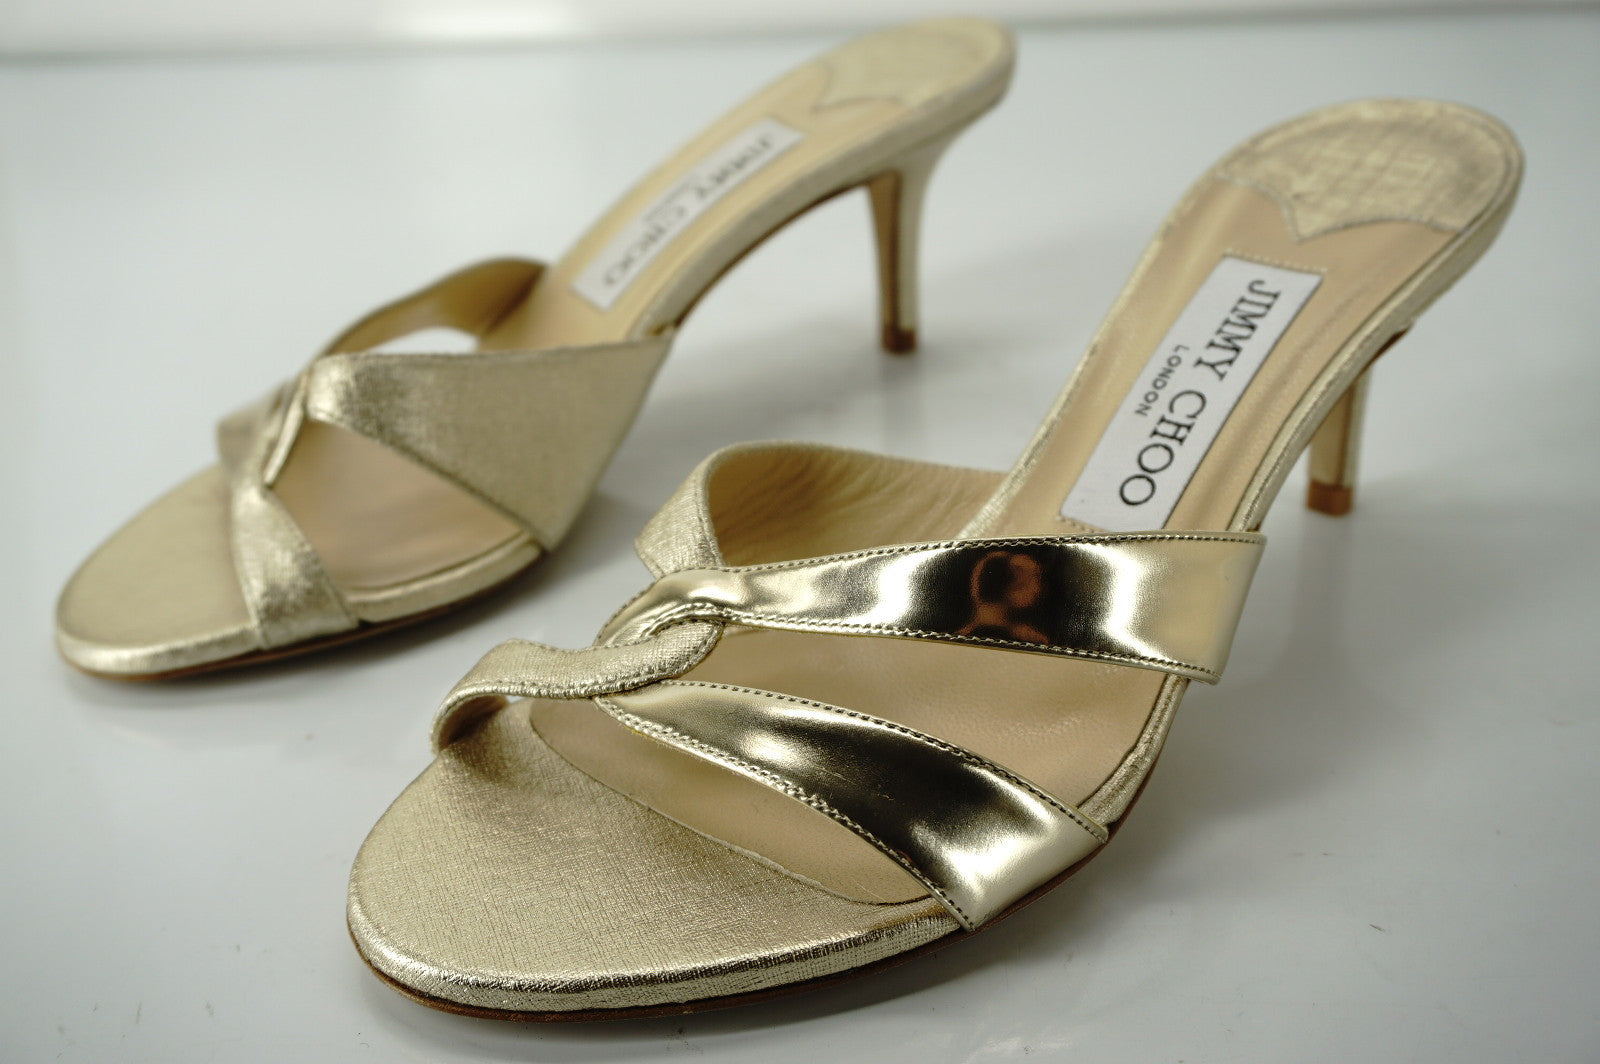 Jimmy Choo Tation Metallic Gold Leather Mid Heel Slide Sandals SZ 36.5 New $675